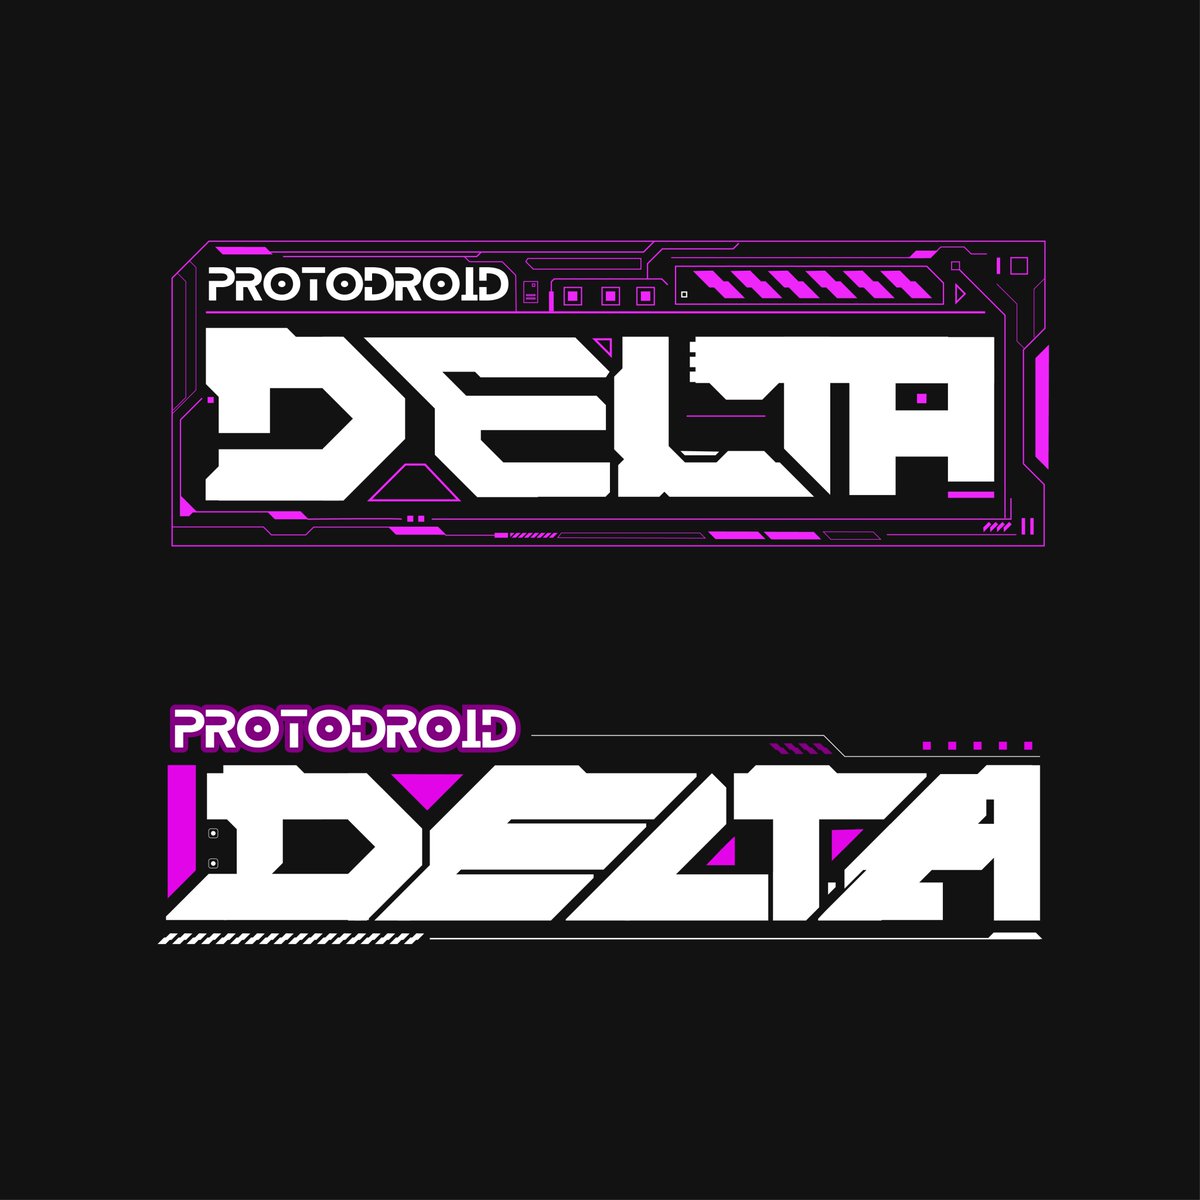 'Protodroid delta' cyberpunk logo 
i'm open for commission anyways

#Vgen #VGenComm #Logocyber #Cyberpunklogo
#logocommission